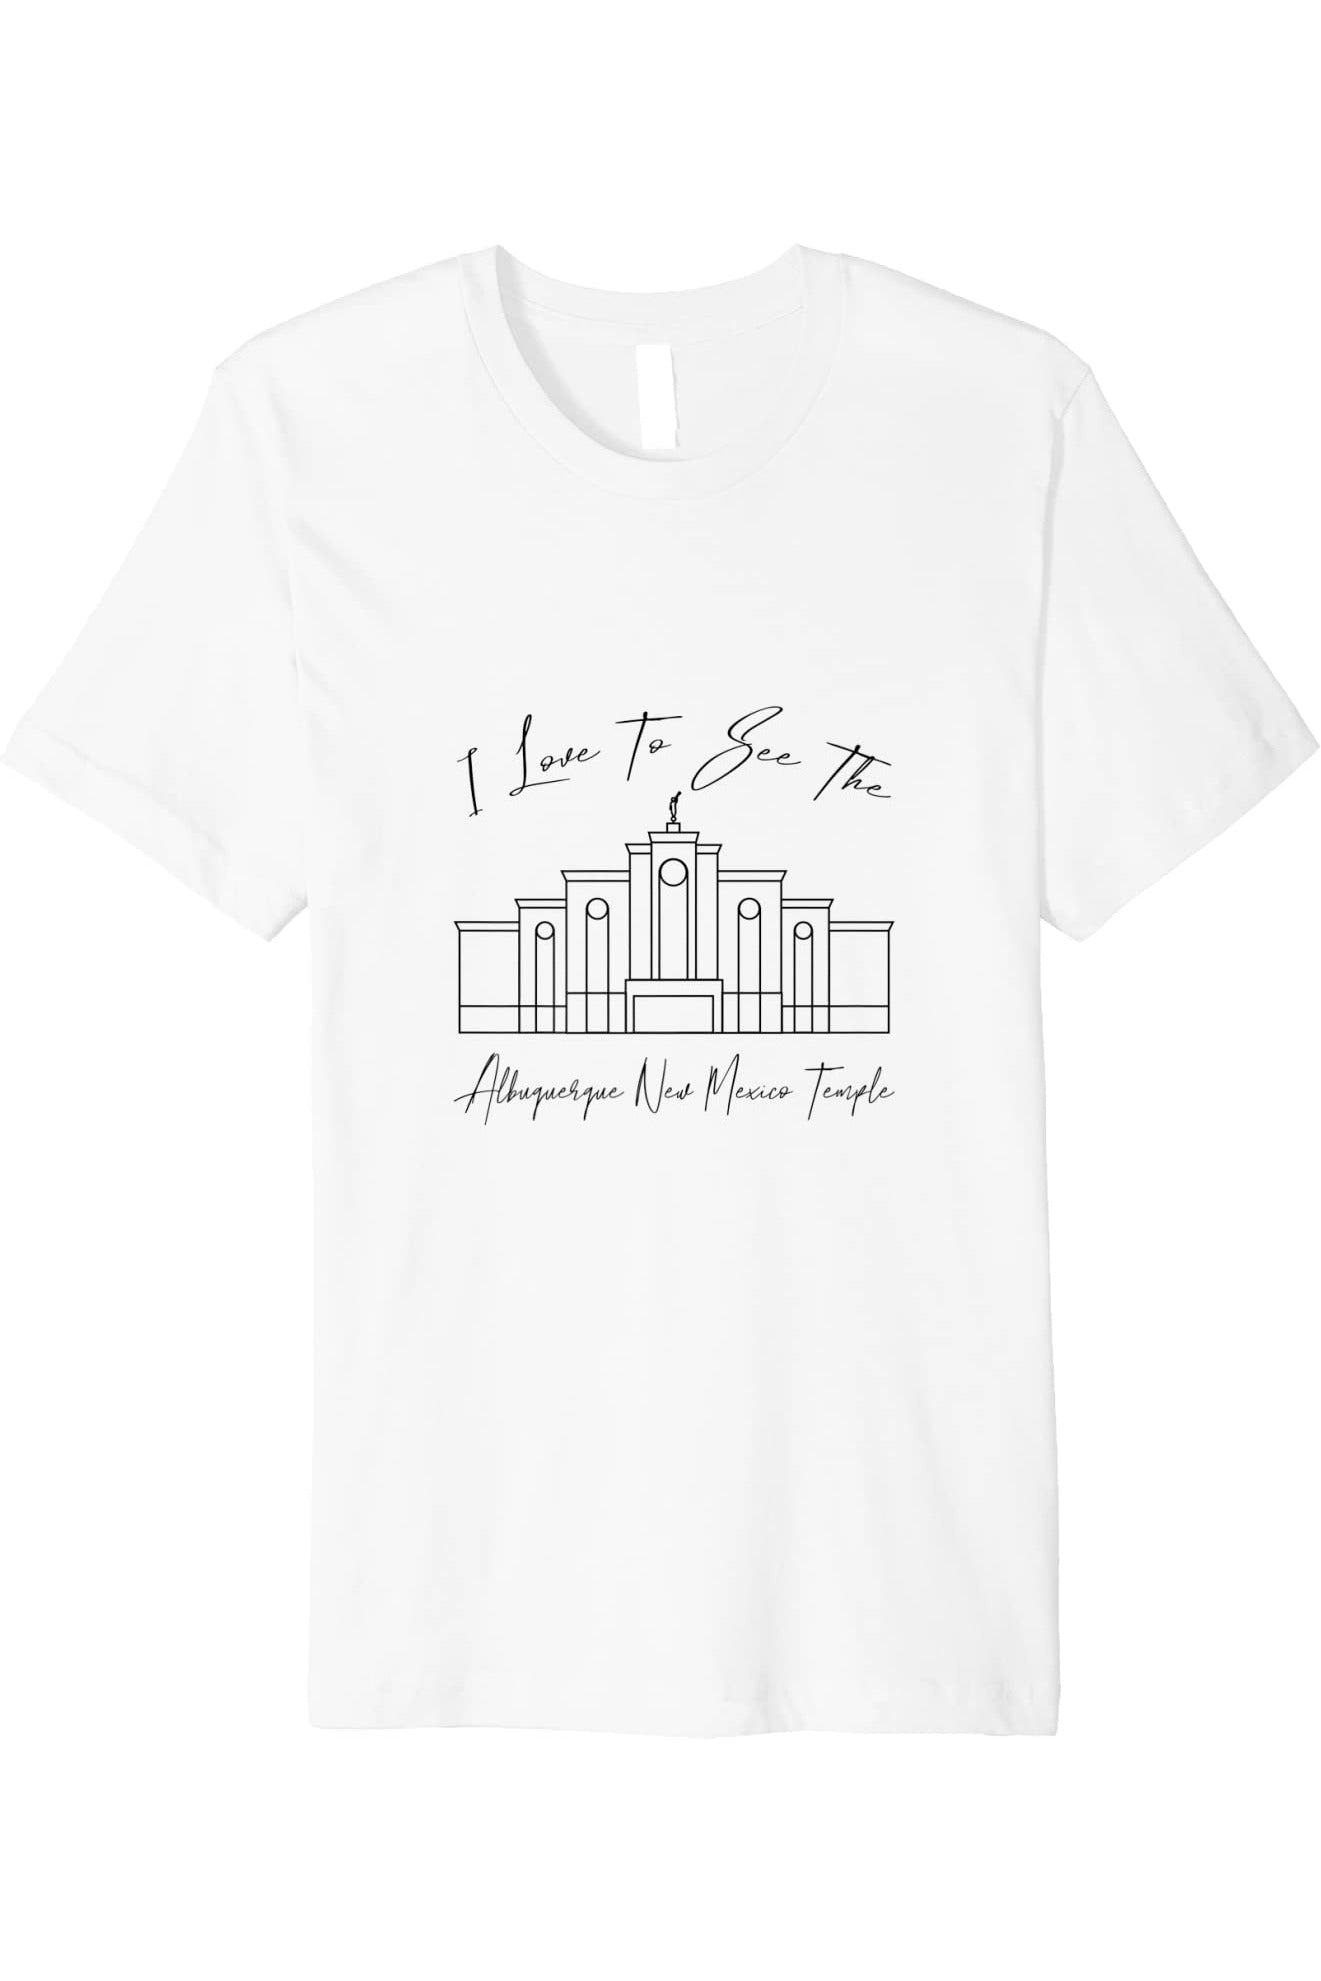 Albuquerque New Mexico Temple T-Shirt - Premium - Calligraphy Style (English) US